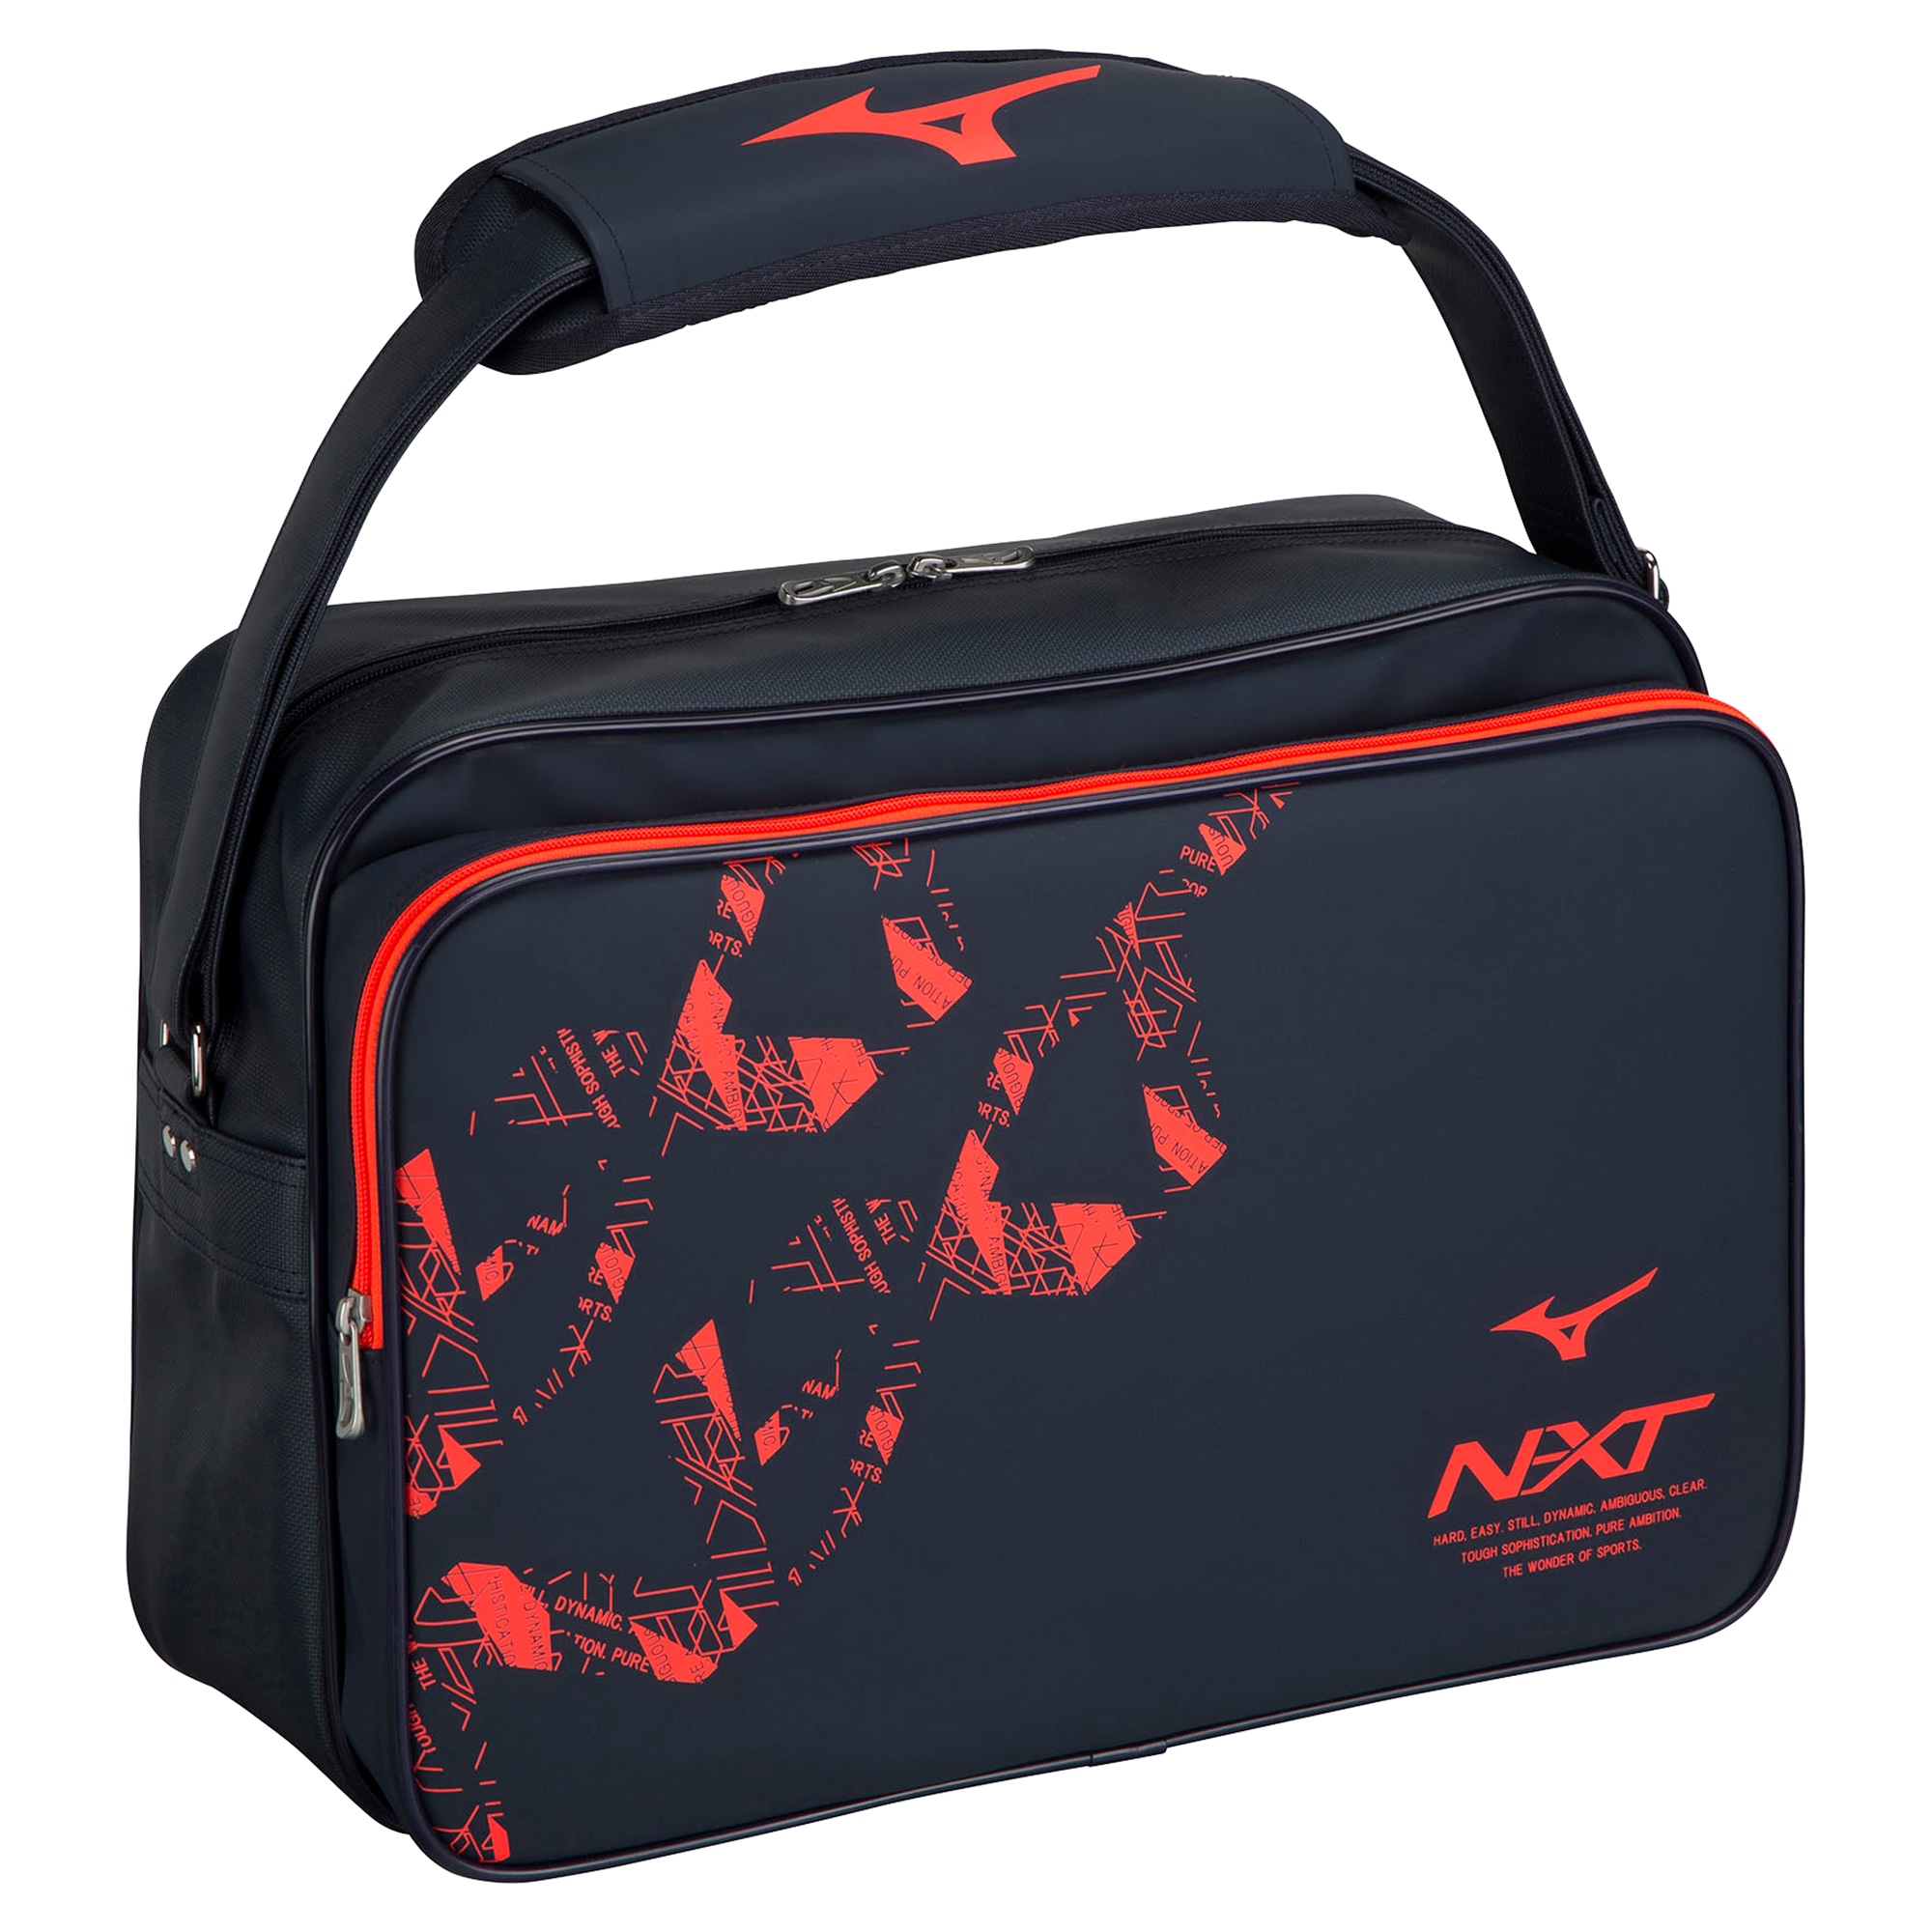 N-XTショルダーバッグL(30L)|33JS3002|ショルダーバッグ|バッグ|ミズノ 